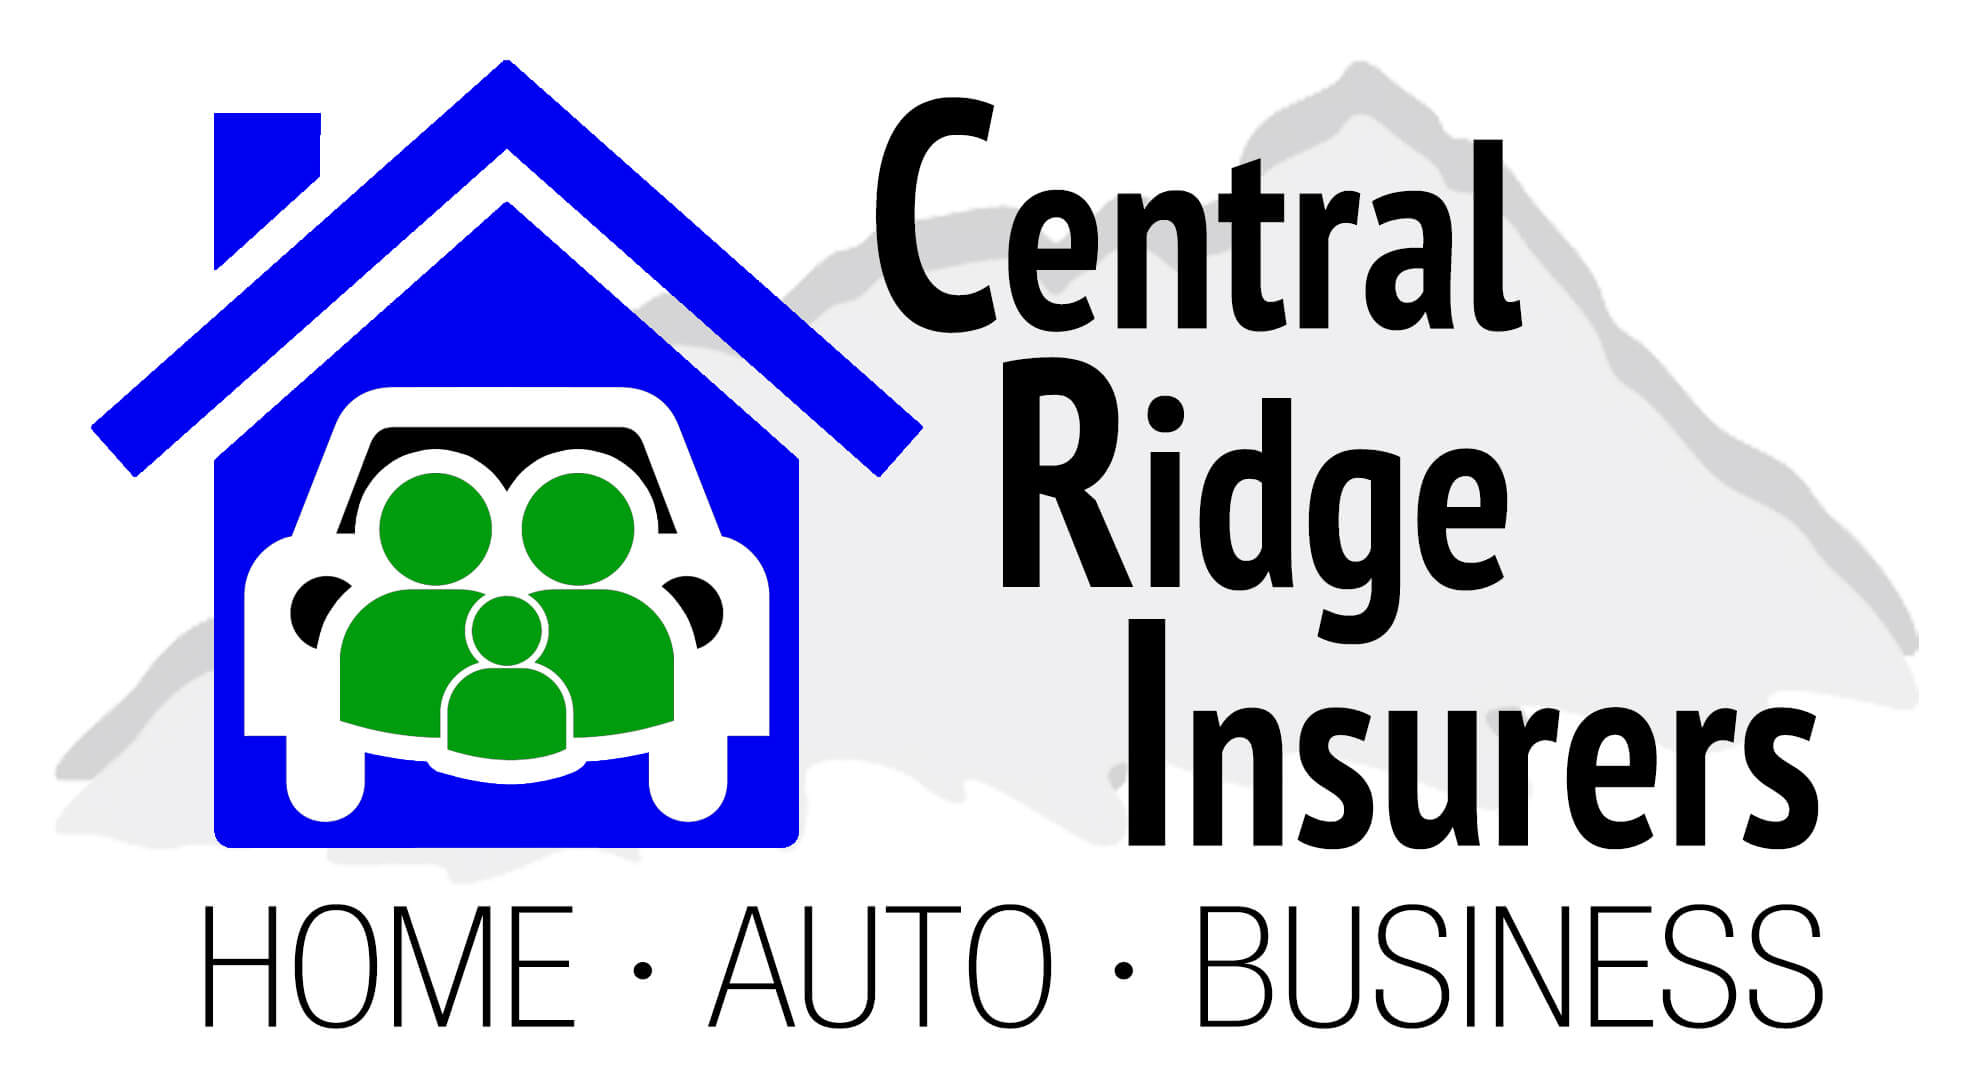 Central Ridge Insurers